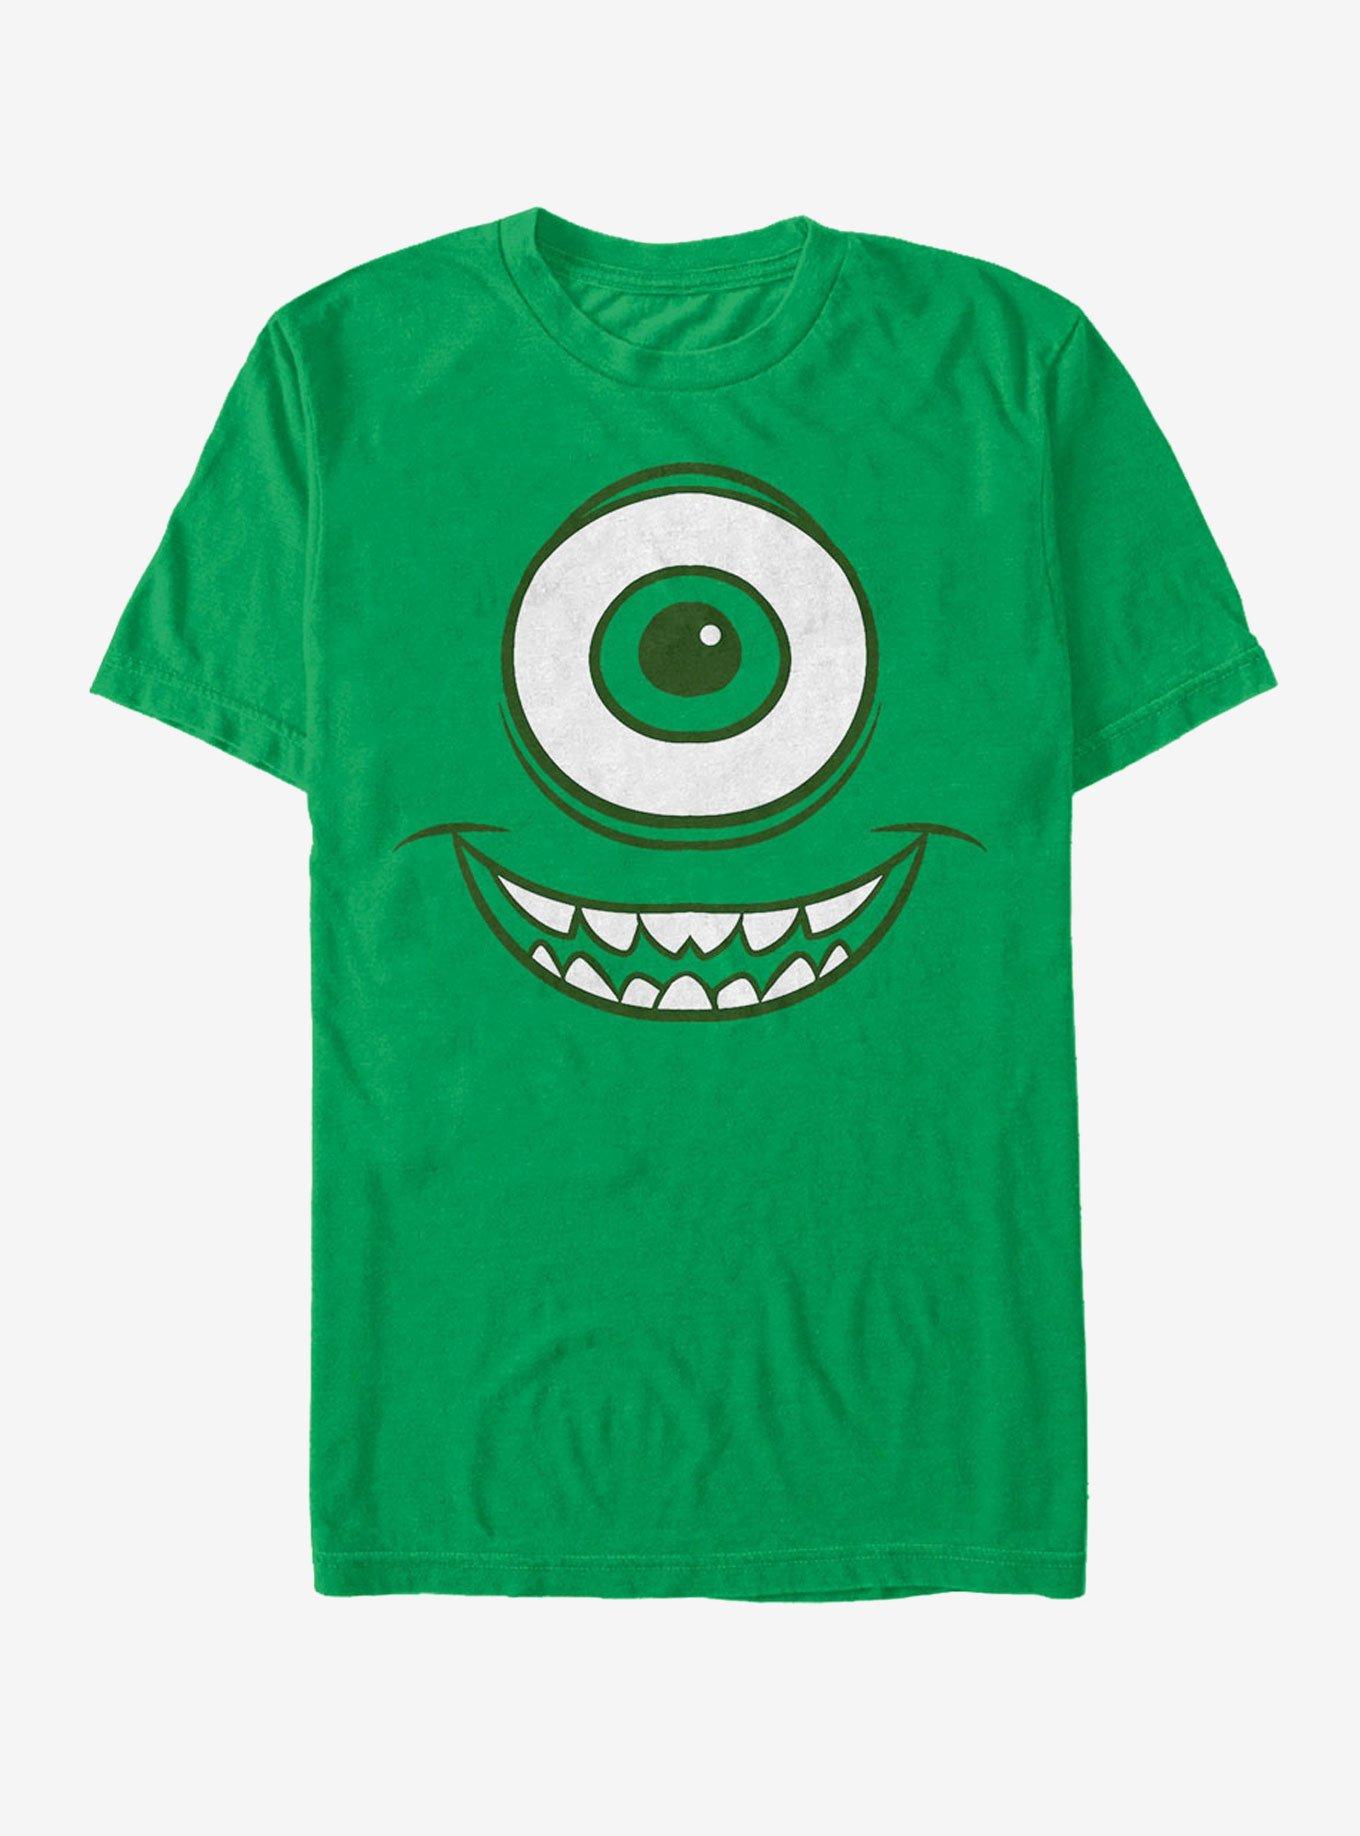 Disney Pixar Monster's Inc. Mike Wazowski Eye T-Shirt, KELLY, hi-res